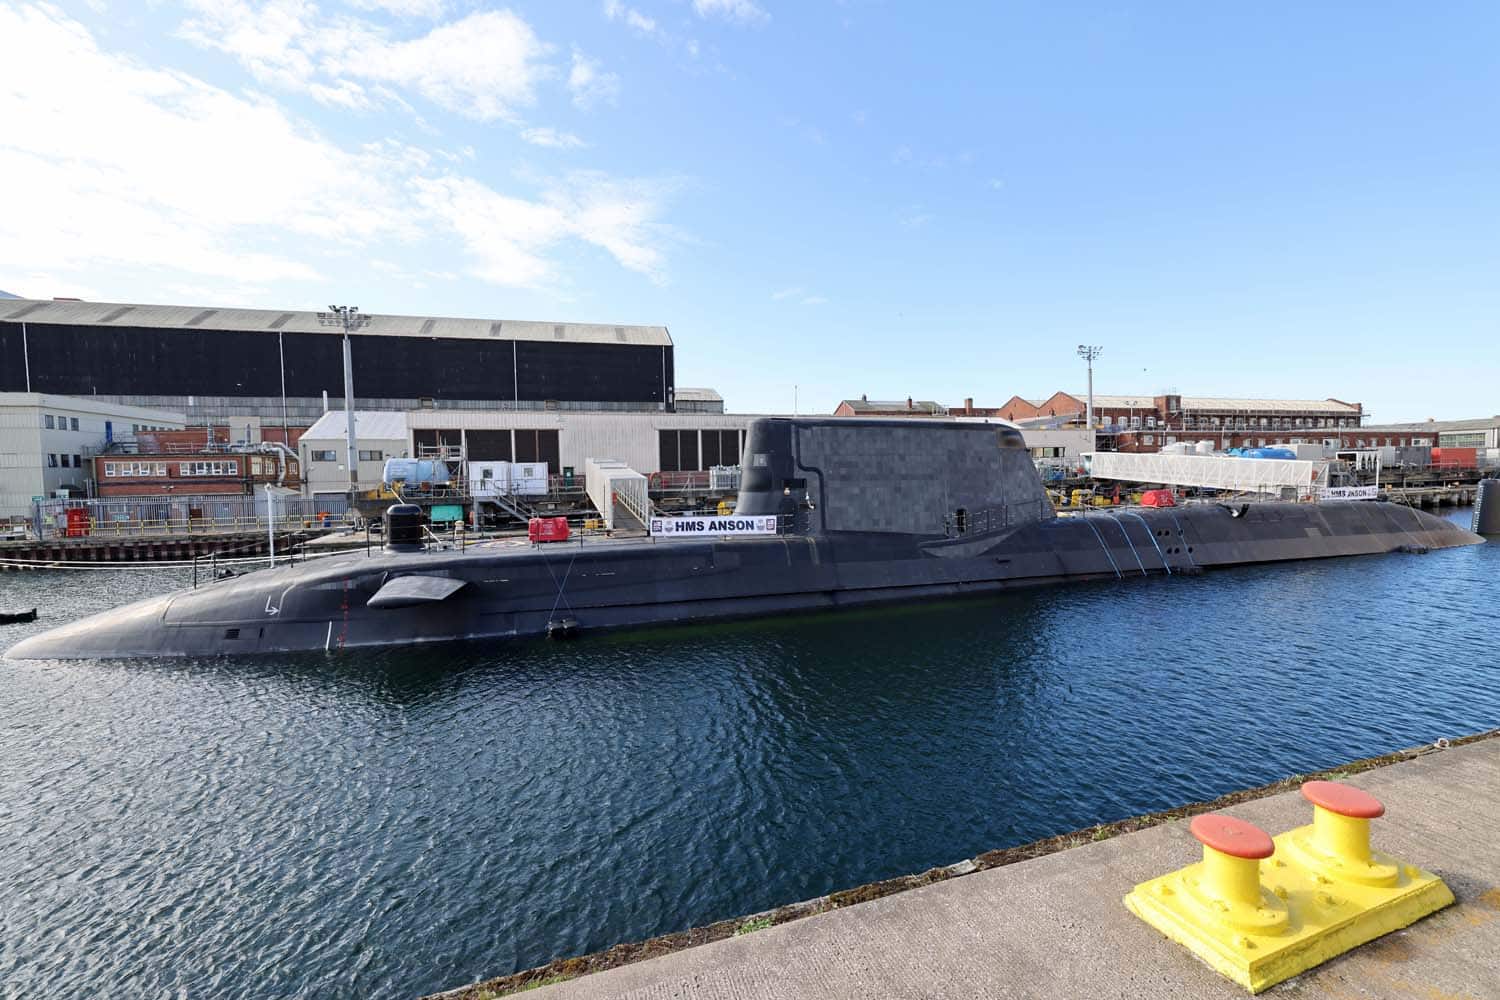 Royal Navy Commissions 5th Astute Class Submarine HMS Anson Naval News